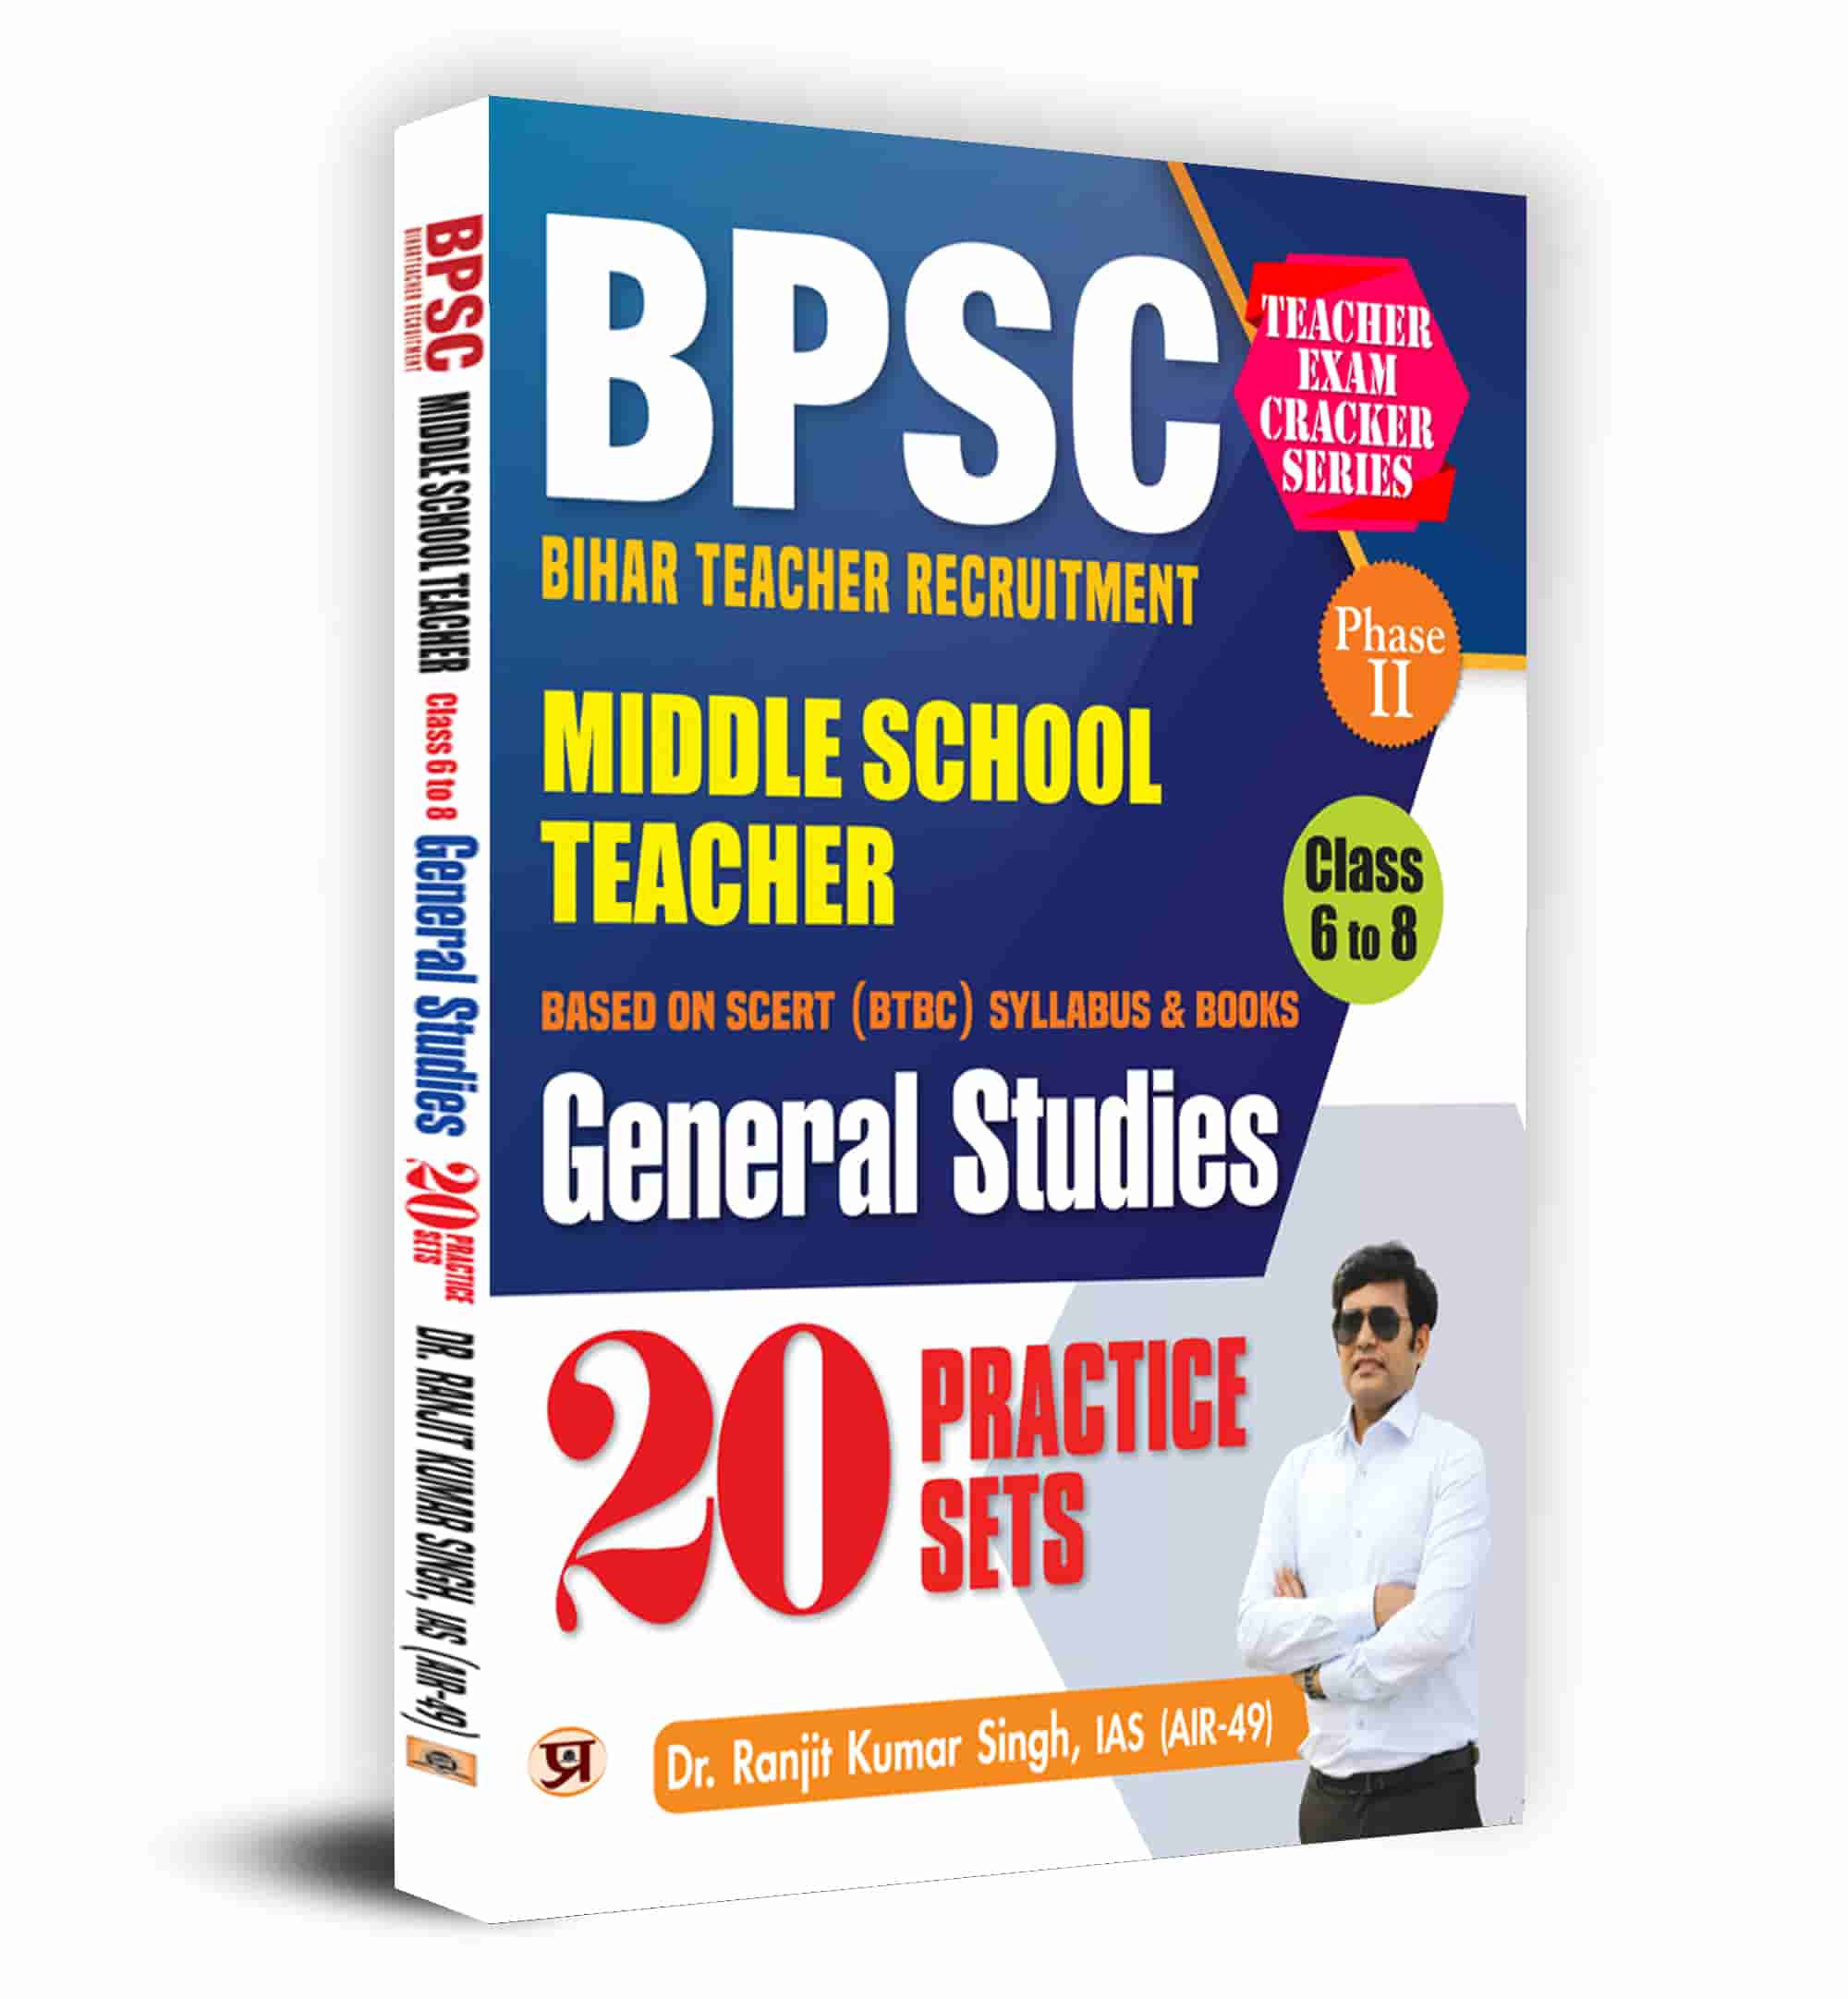 BPSC Bihar Teacher Recruitment for Middle School Teachers Phase II  Class 6 To 8 General Studies 20 Practice Sets Based on SCERT